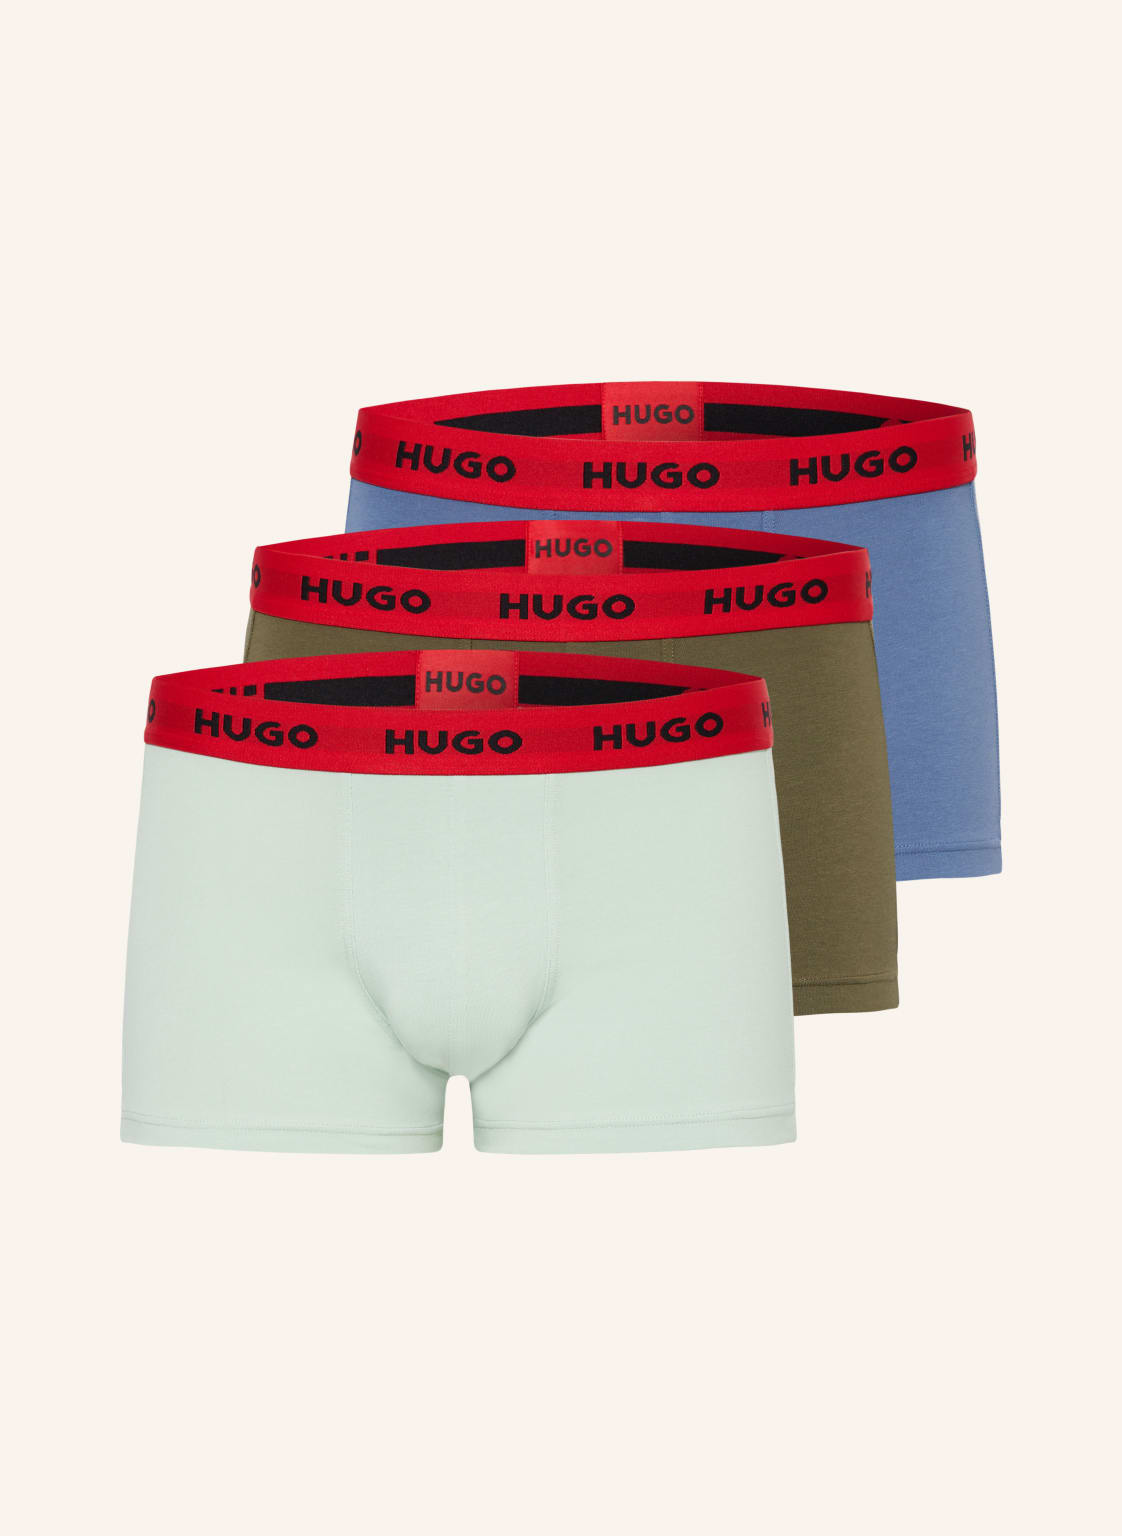 Hugo 3er-Pack Boxershorts grau von HUGO